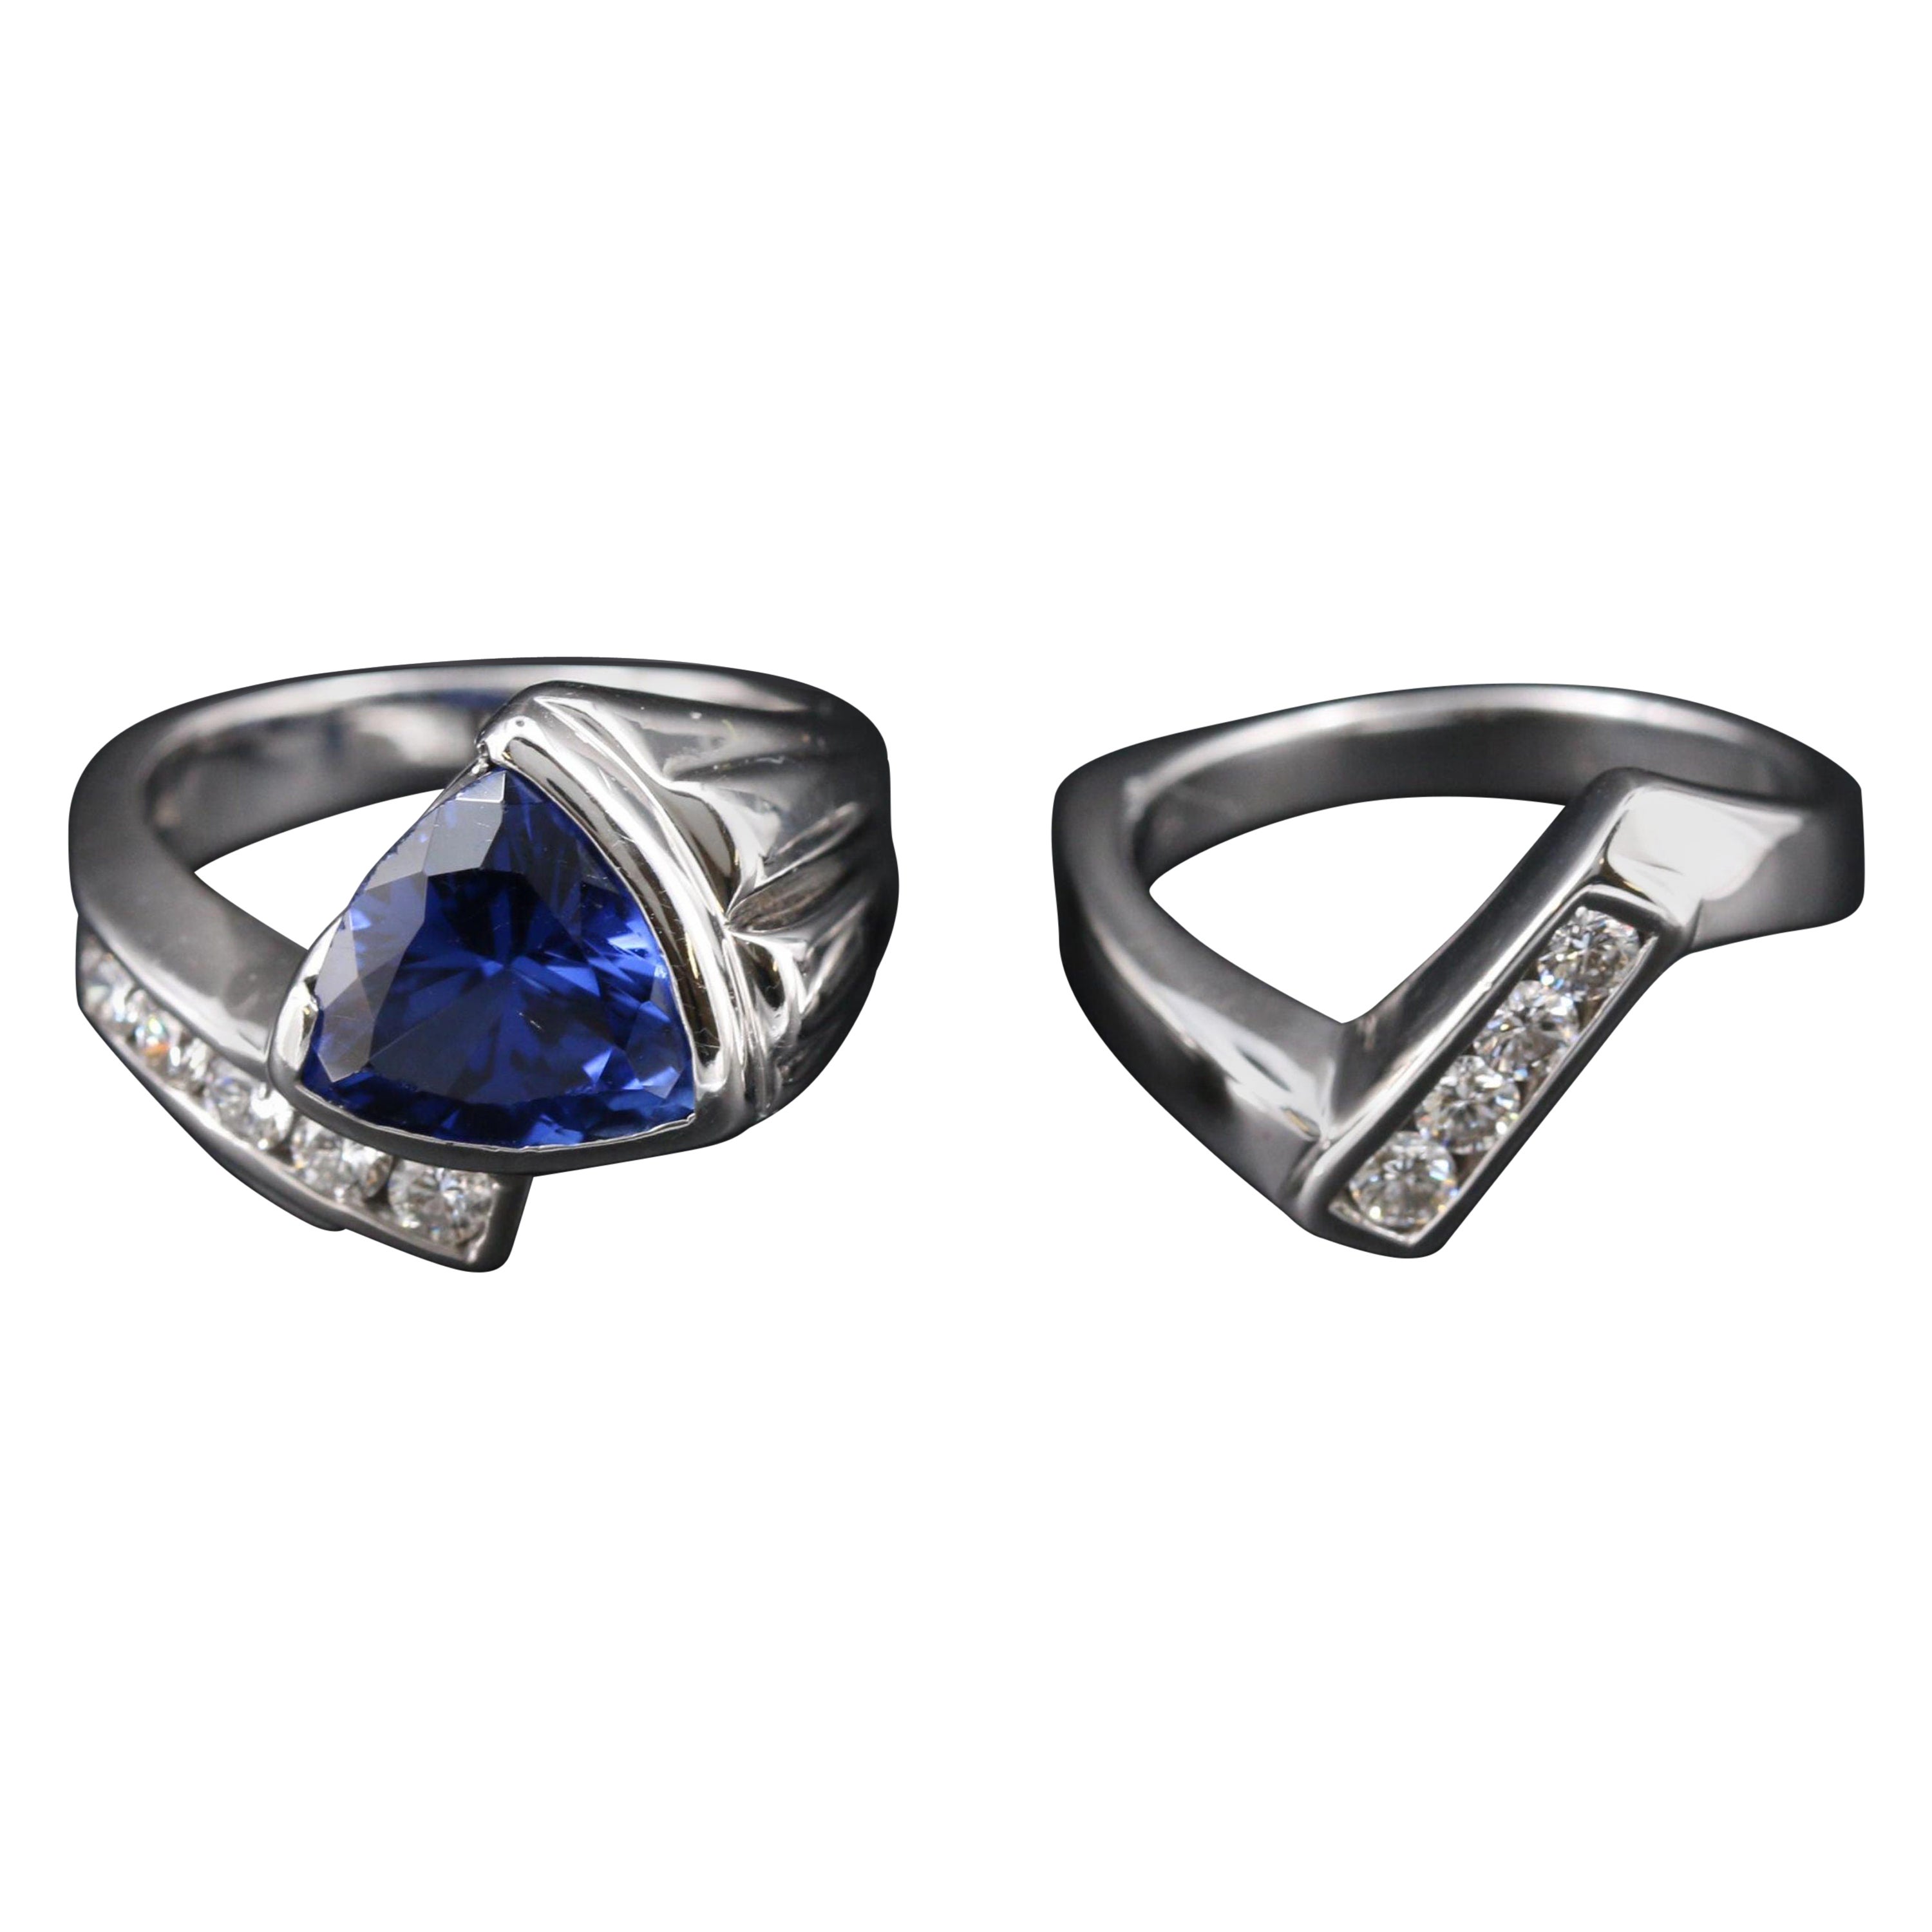 2 Carat Trillion Cut Sapphire Engagement Ring Set Sapphire Diamond Cocktail Ring